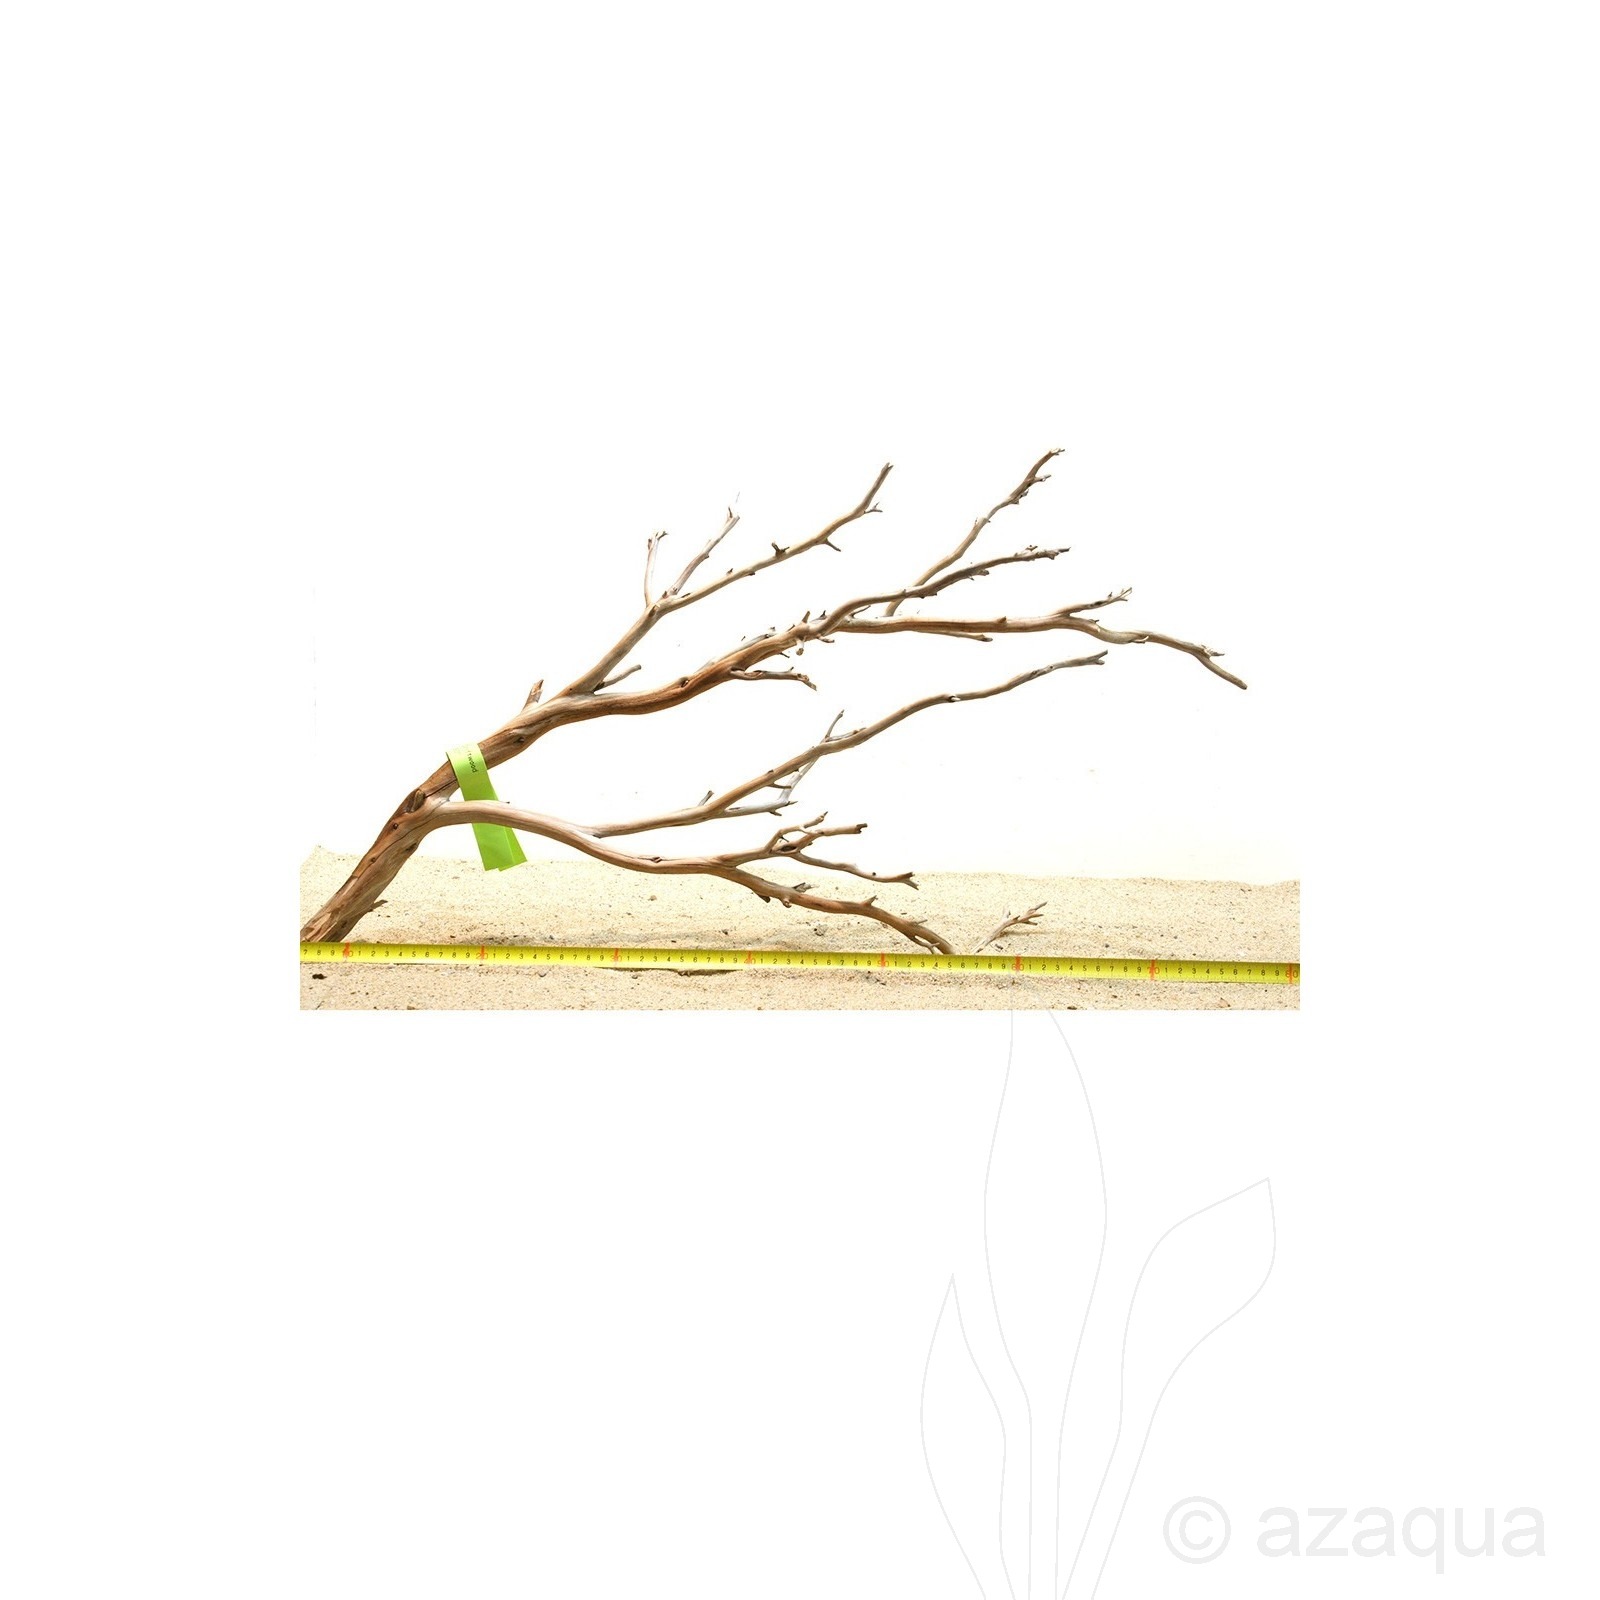 Manzanita wood, XL (60-75cm) - Manzanita Wood for aquarium